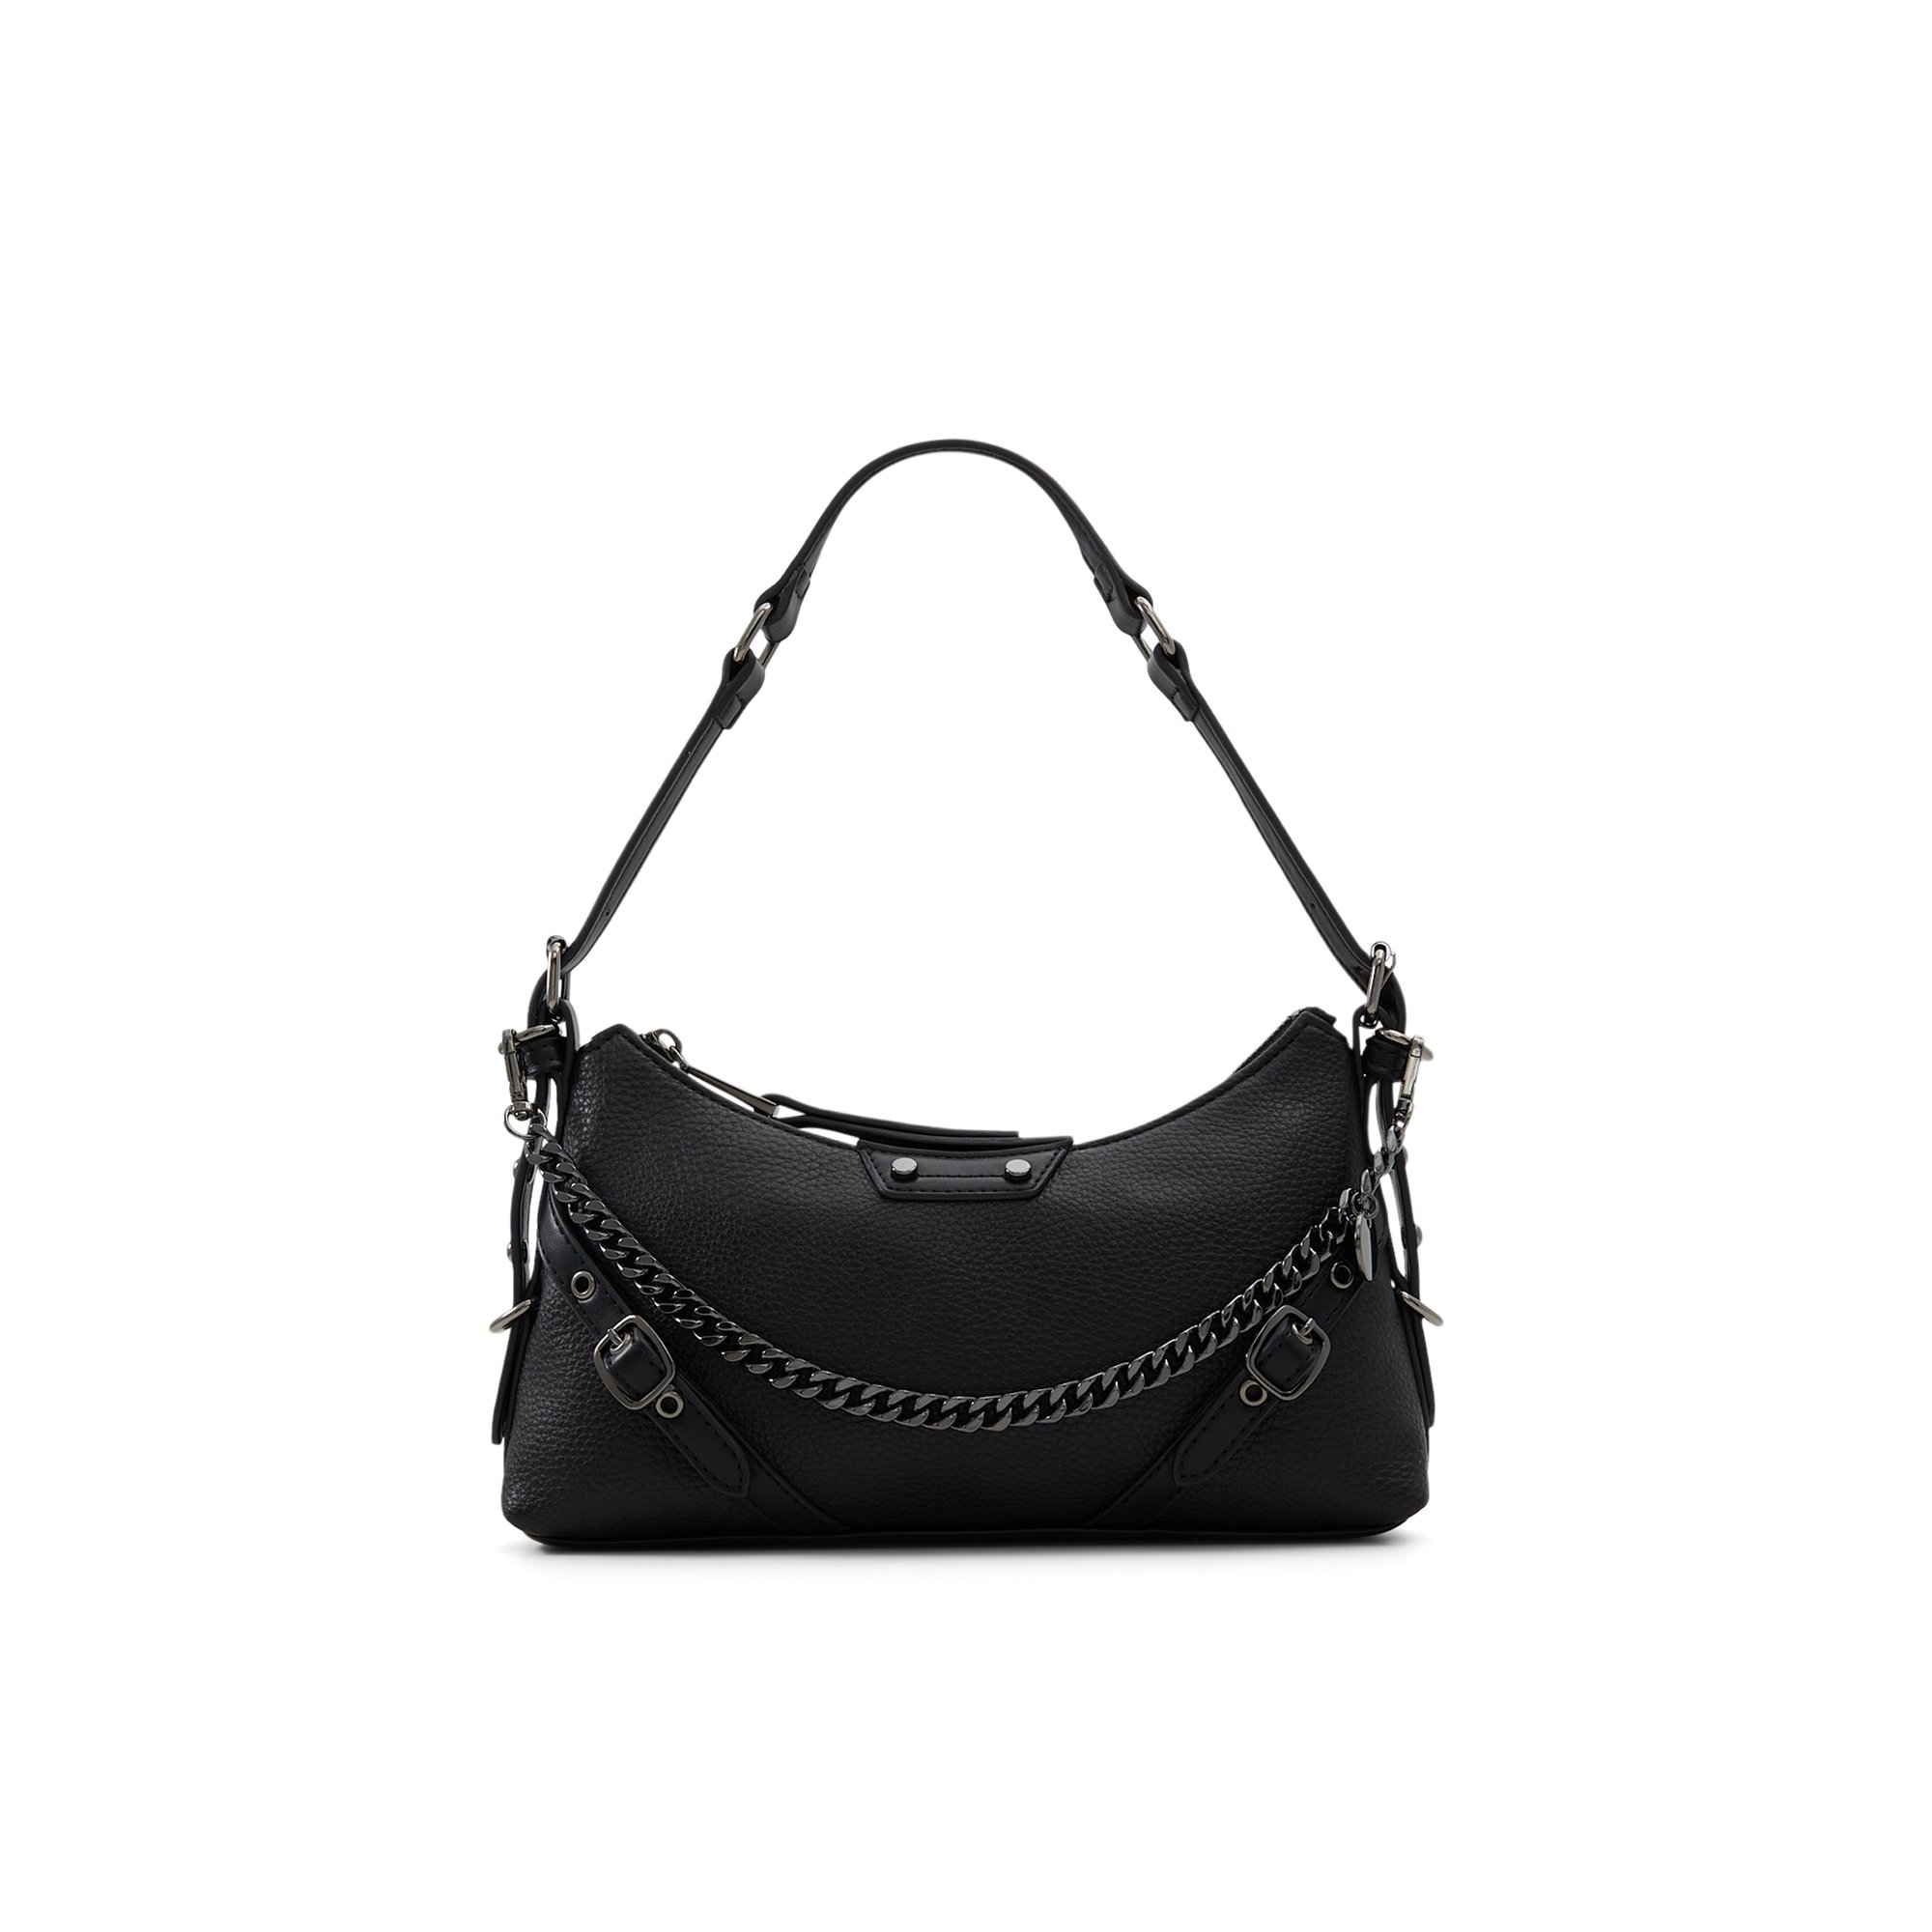 ALDO Faralaeliax - Women's Handbags Shoulder Bags - Black